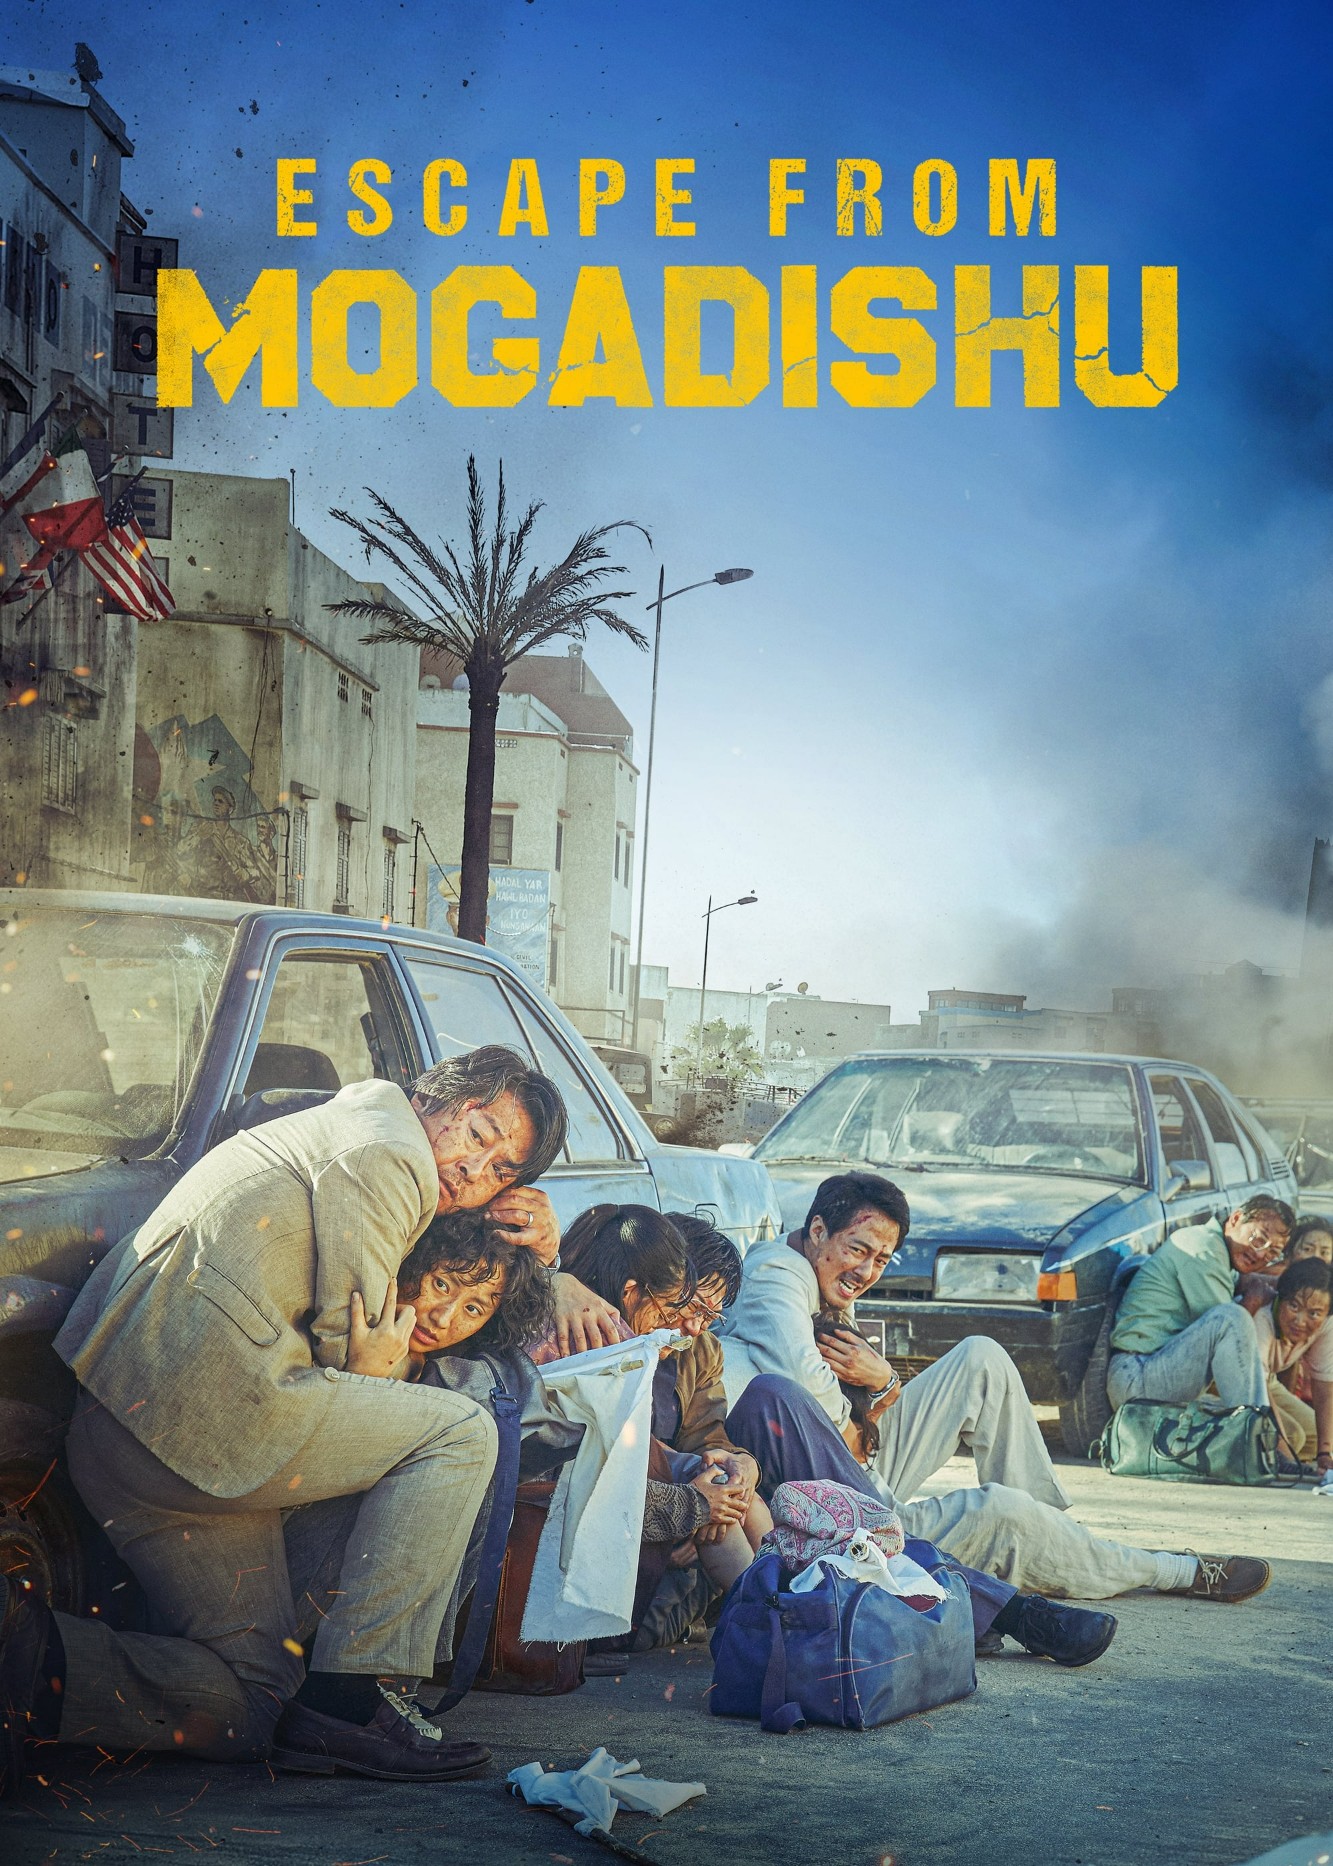 Mogadisyu 2021